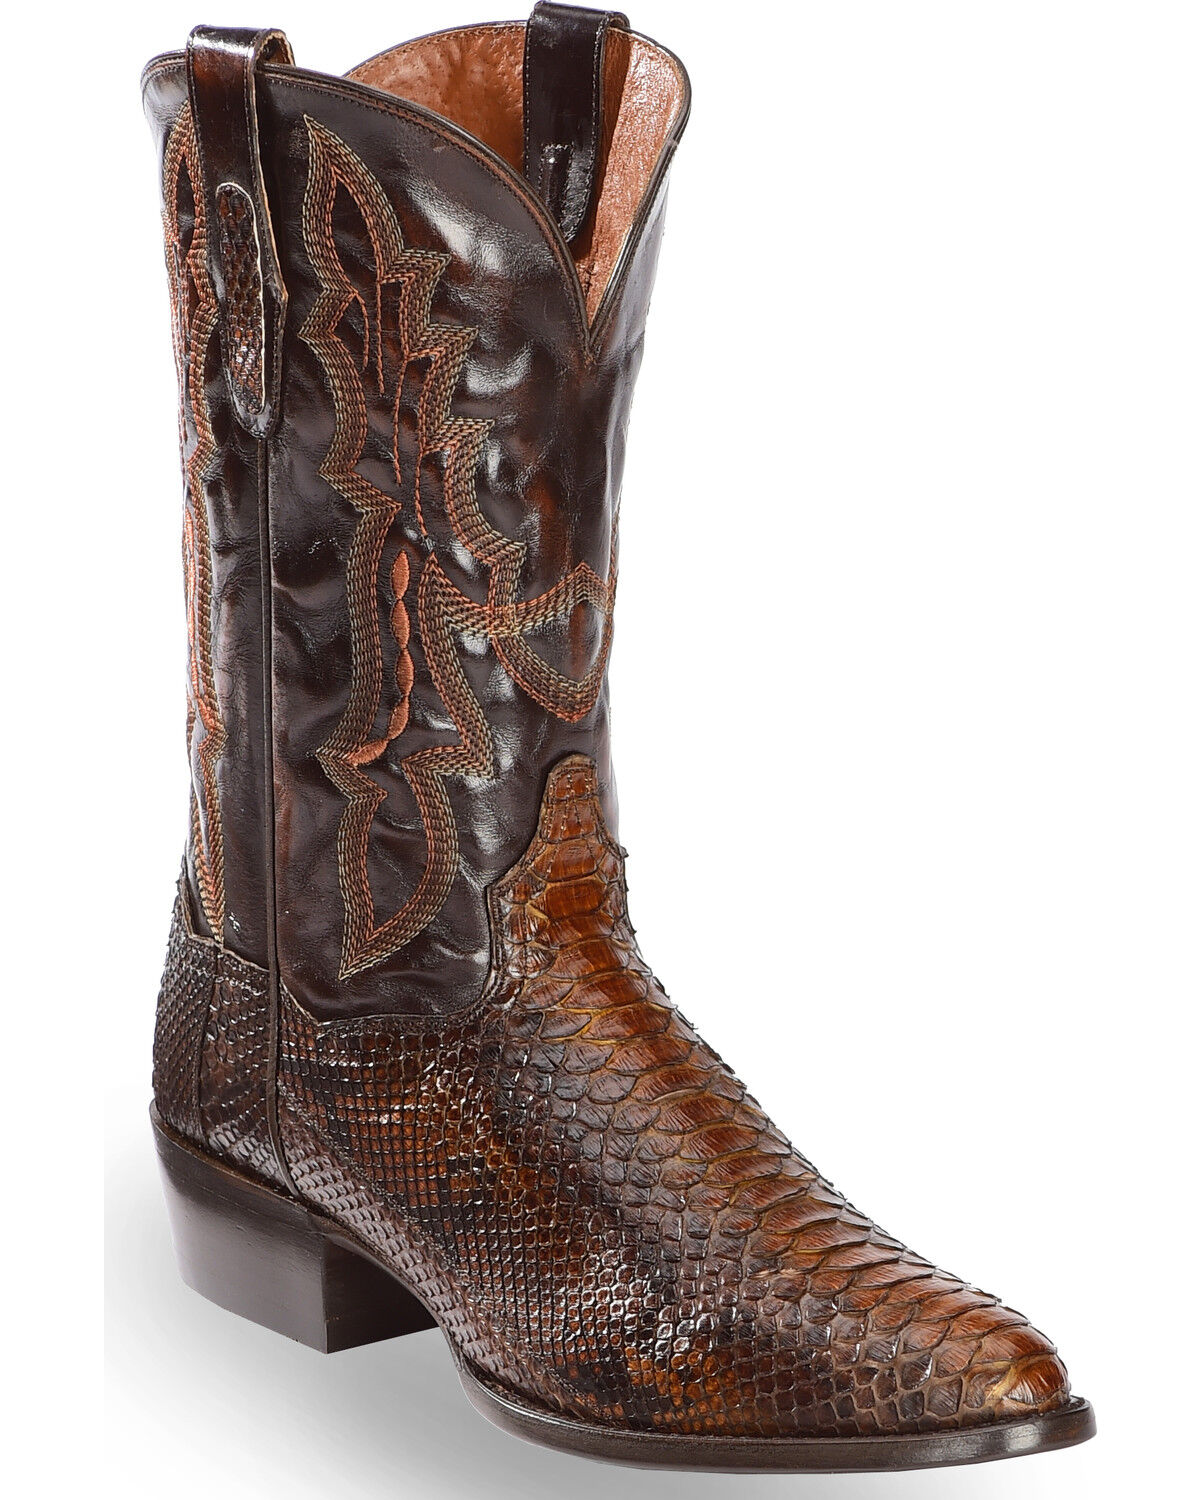 Clearance Cowboy Boots \u0026 Shoes - Sheplers